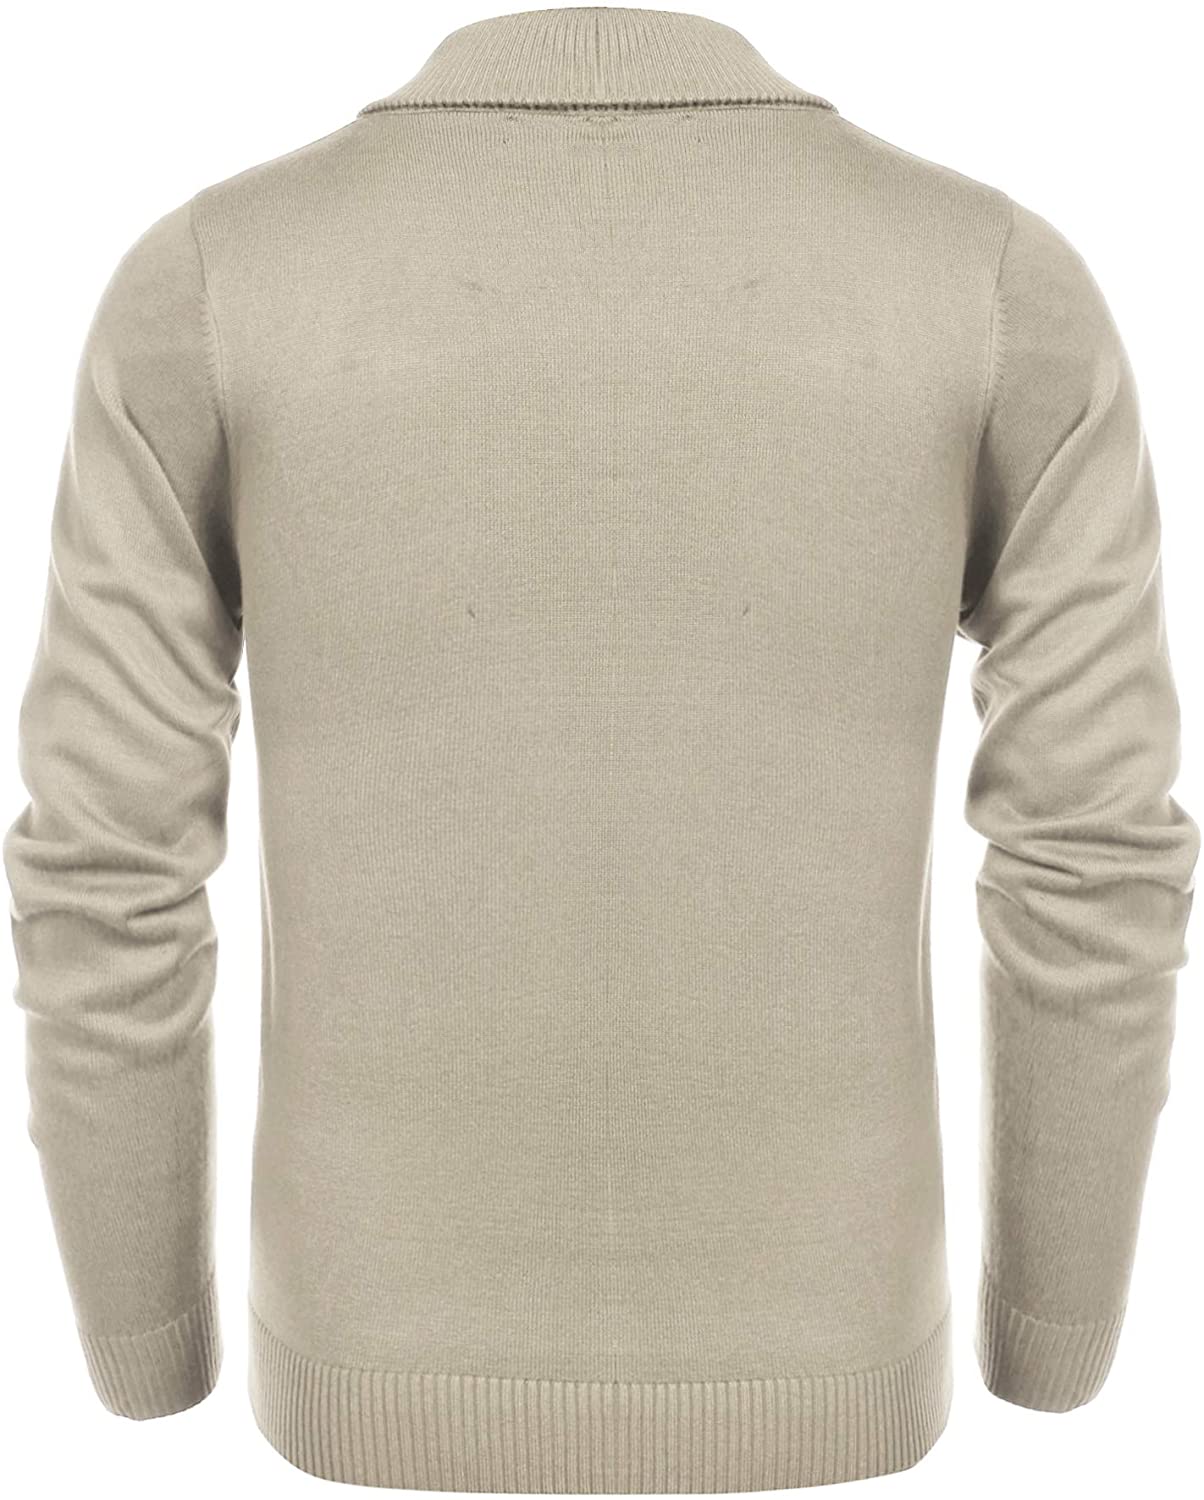 PJ PAUL JONES Mens Cardigan Sweater Shawl Collar Toggel Buttons Knitted Sweater